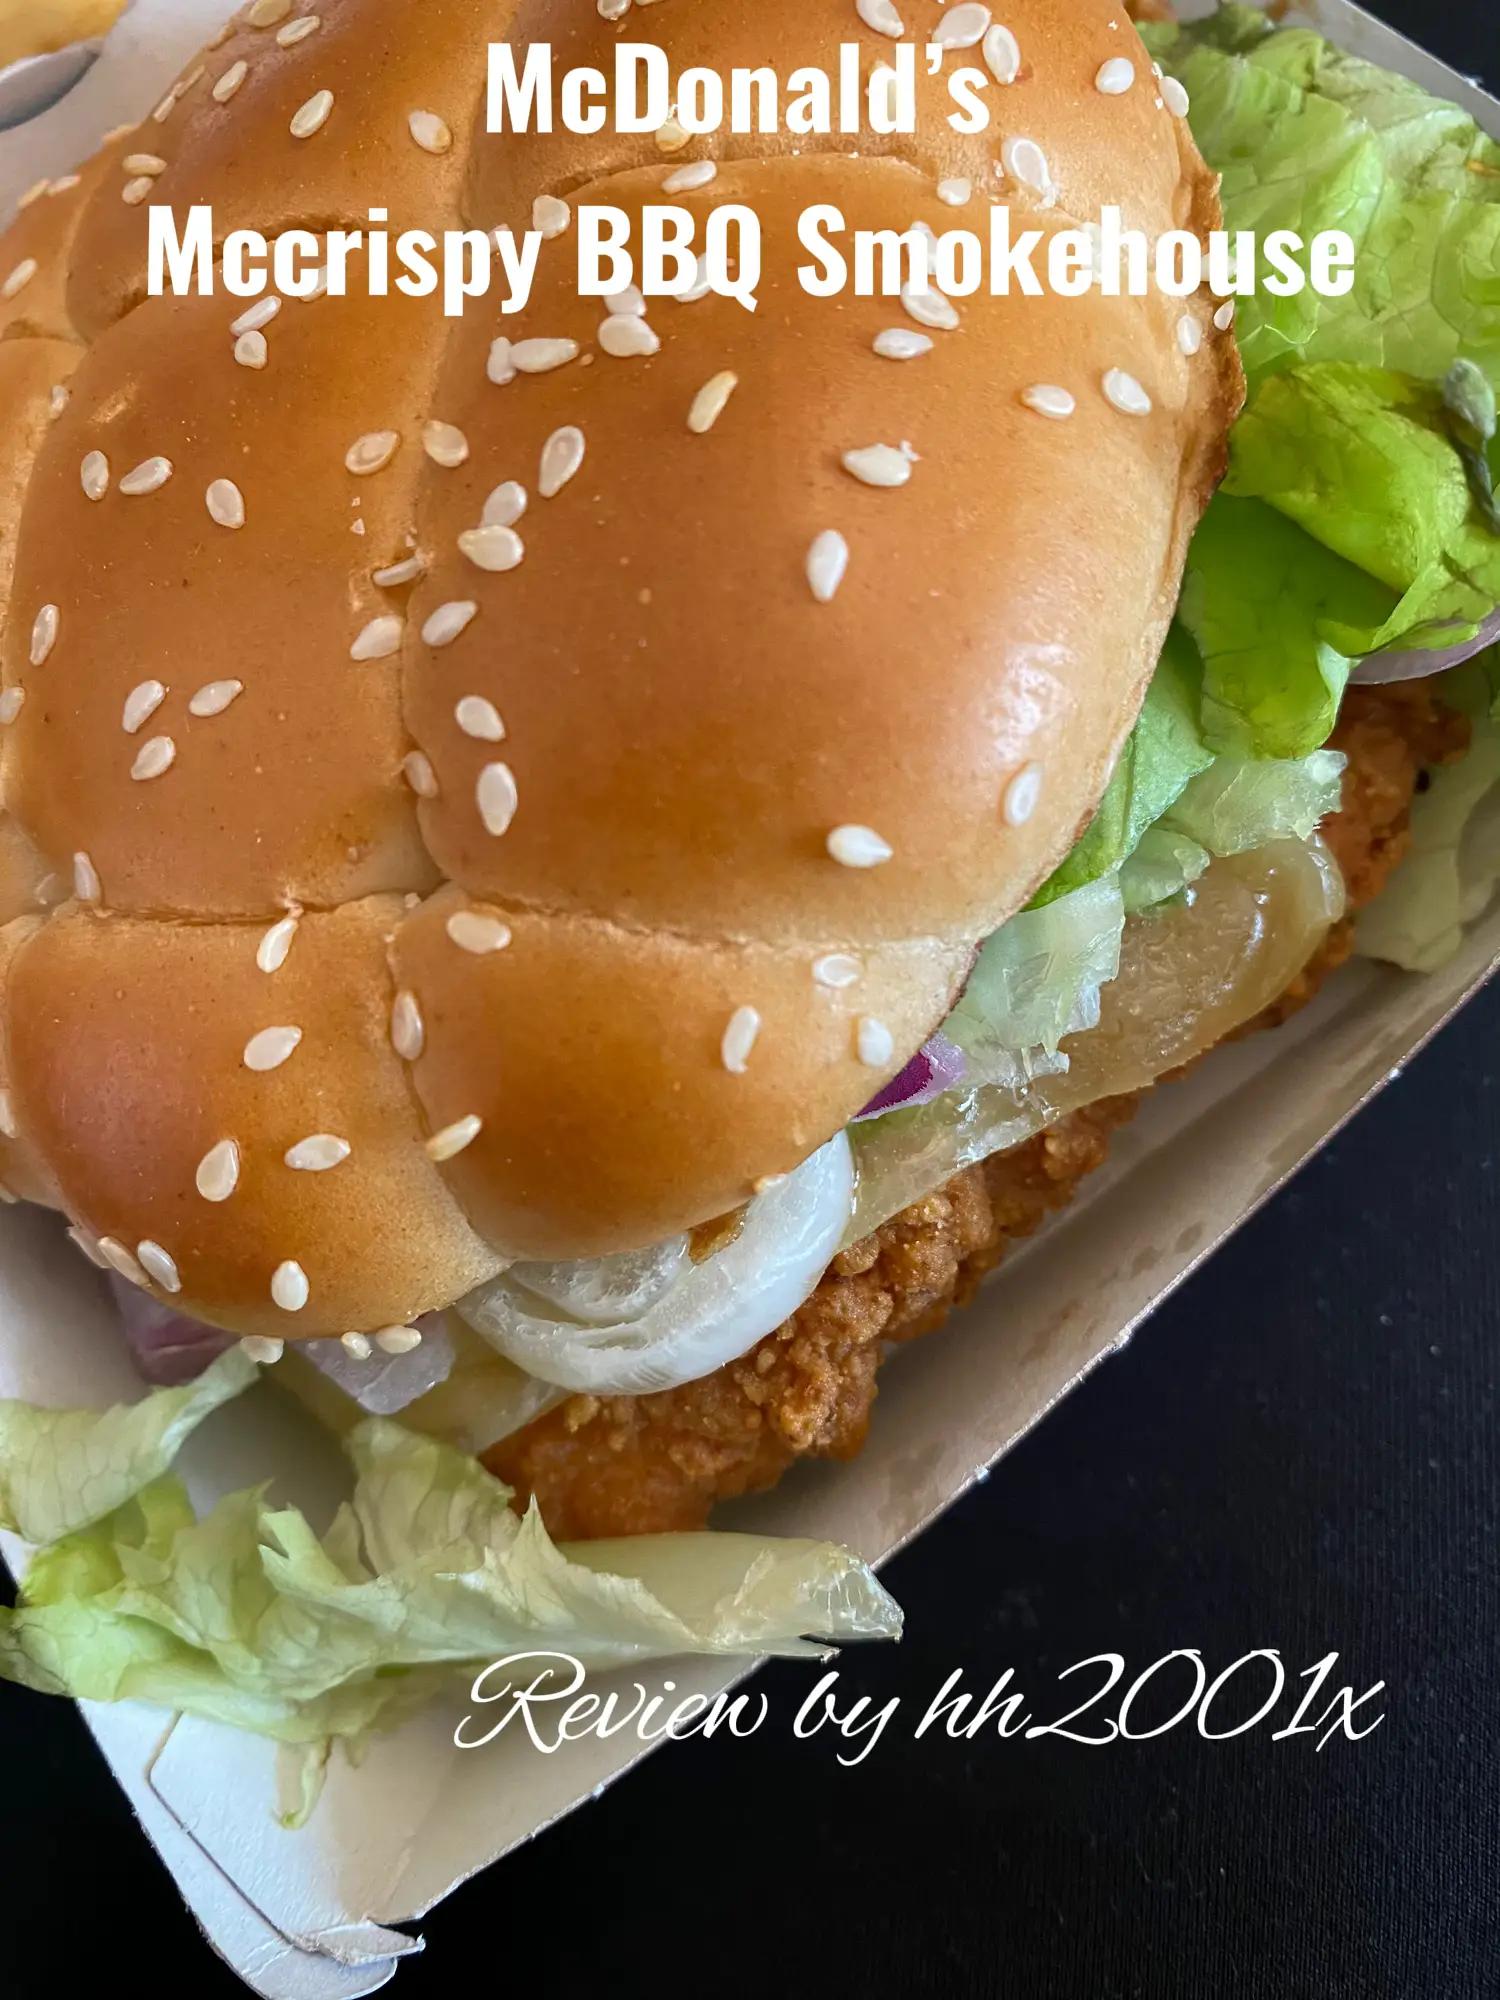 mccrispy smokehouse - What is McDonald's McCrispy made of